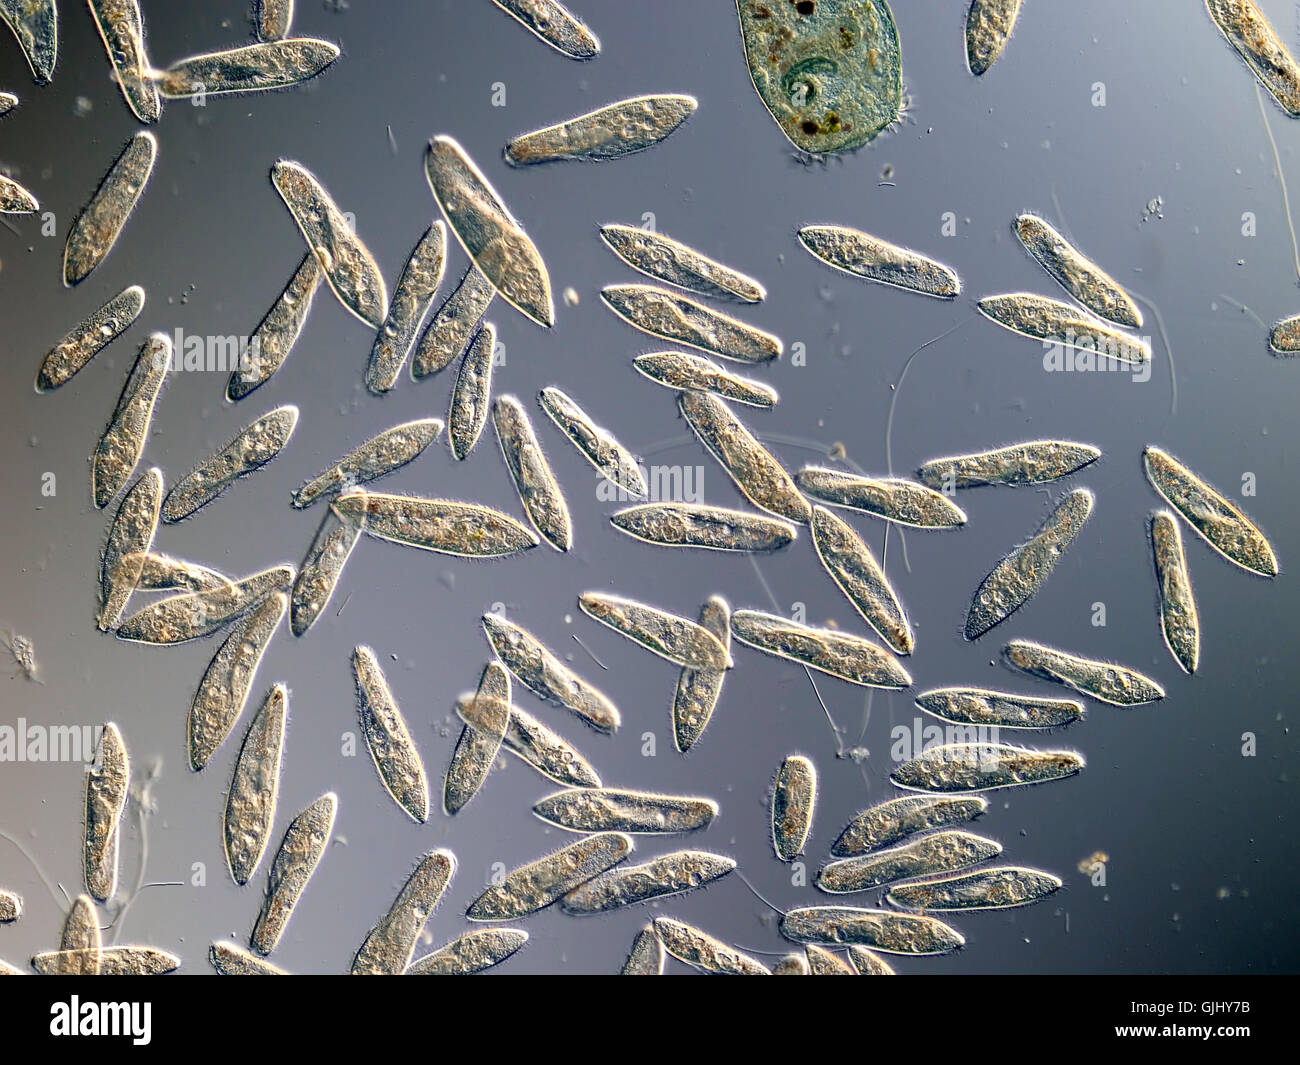 culture cells microscope Stock Photo